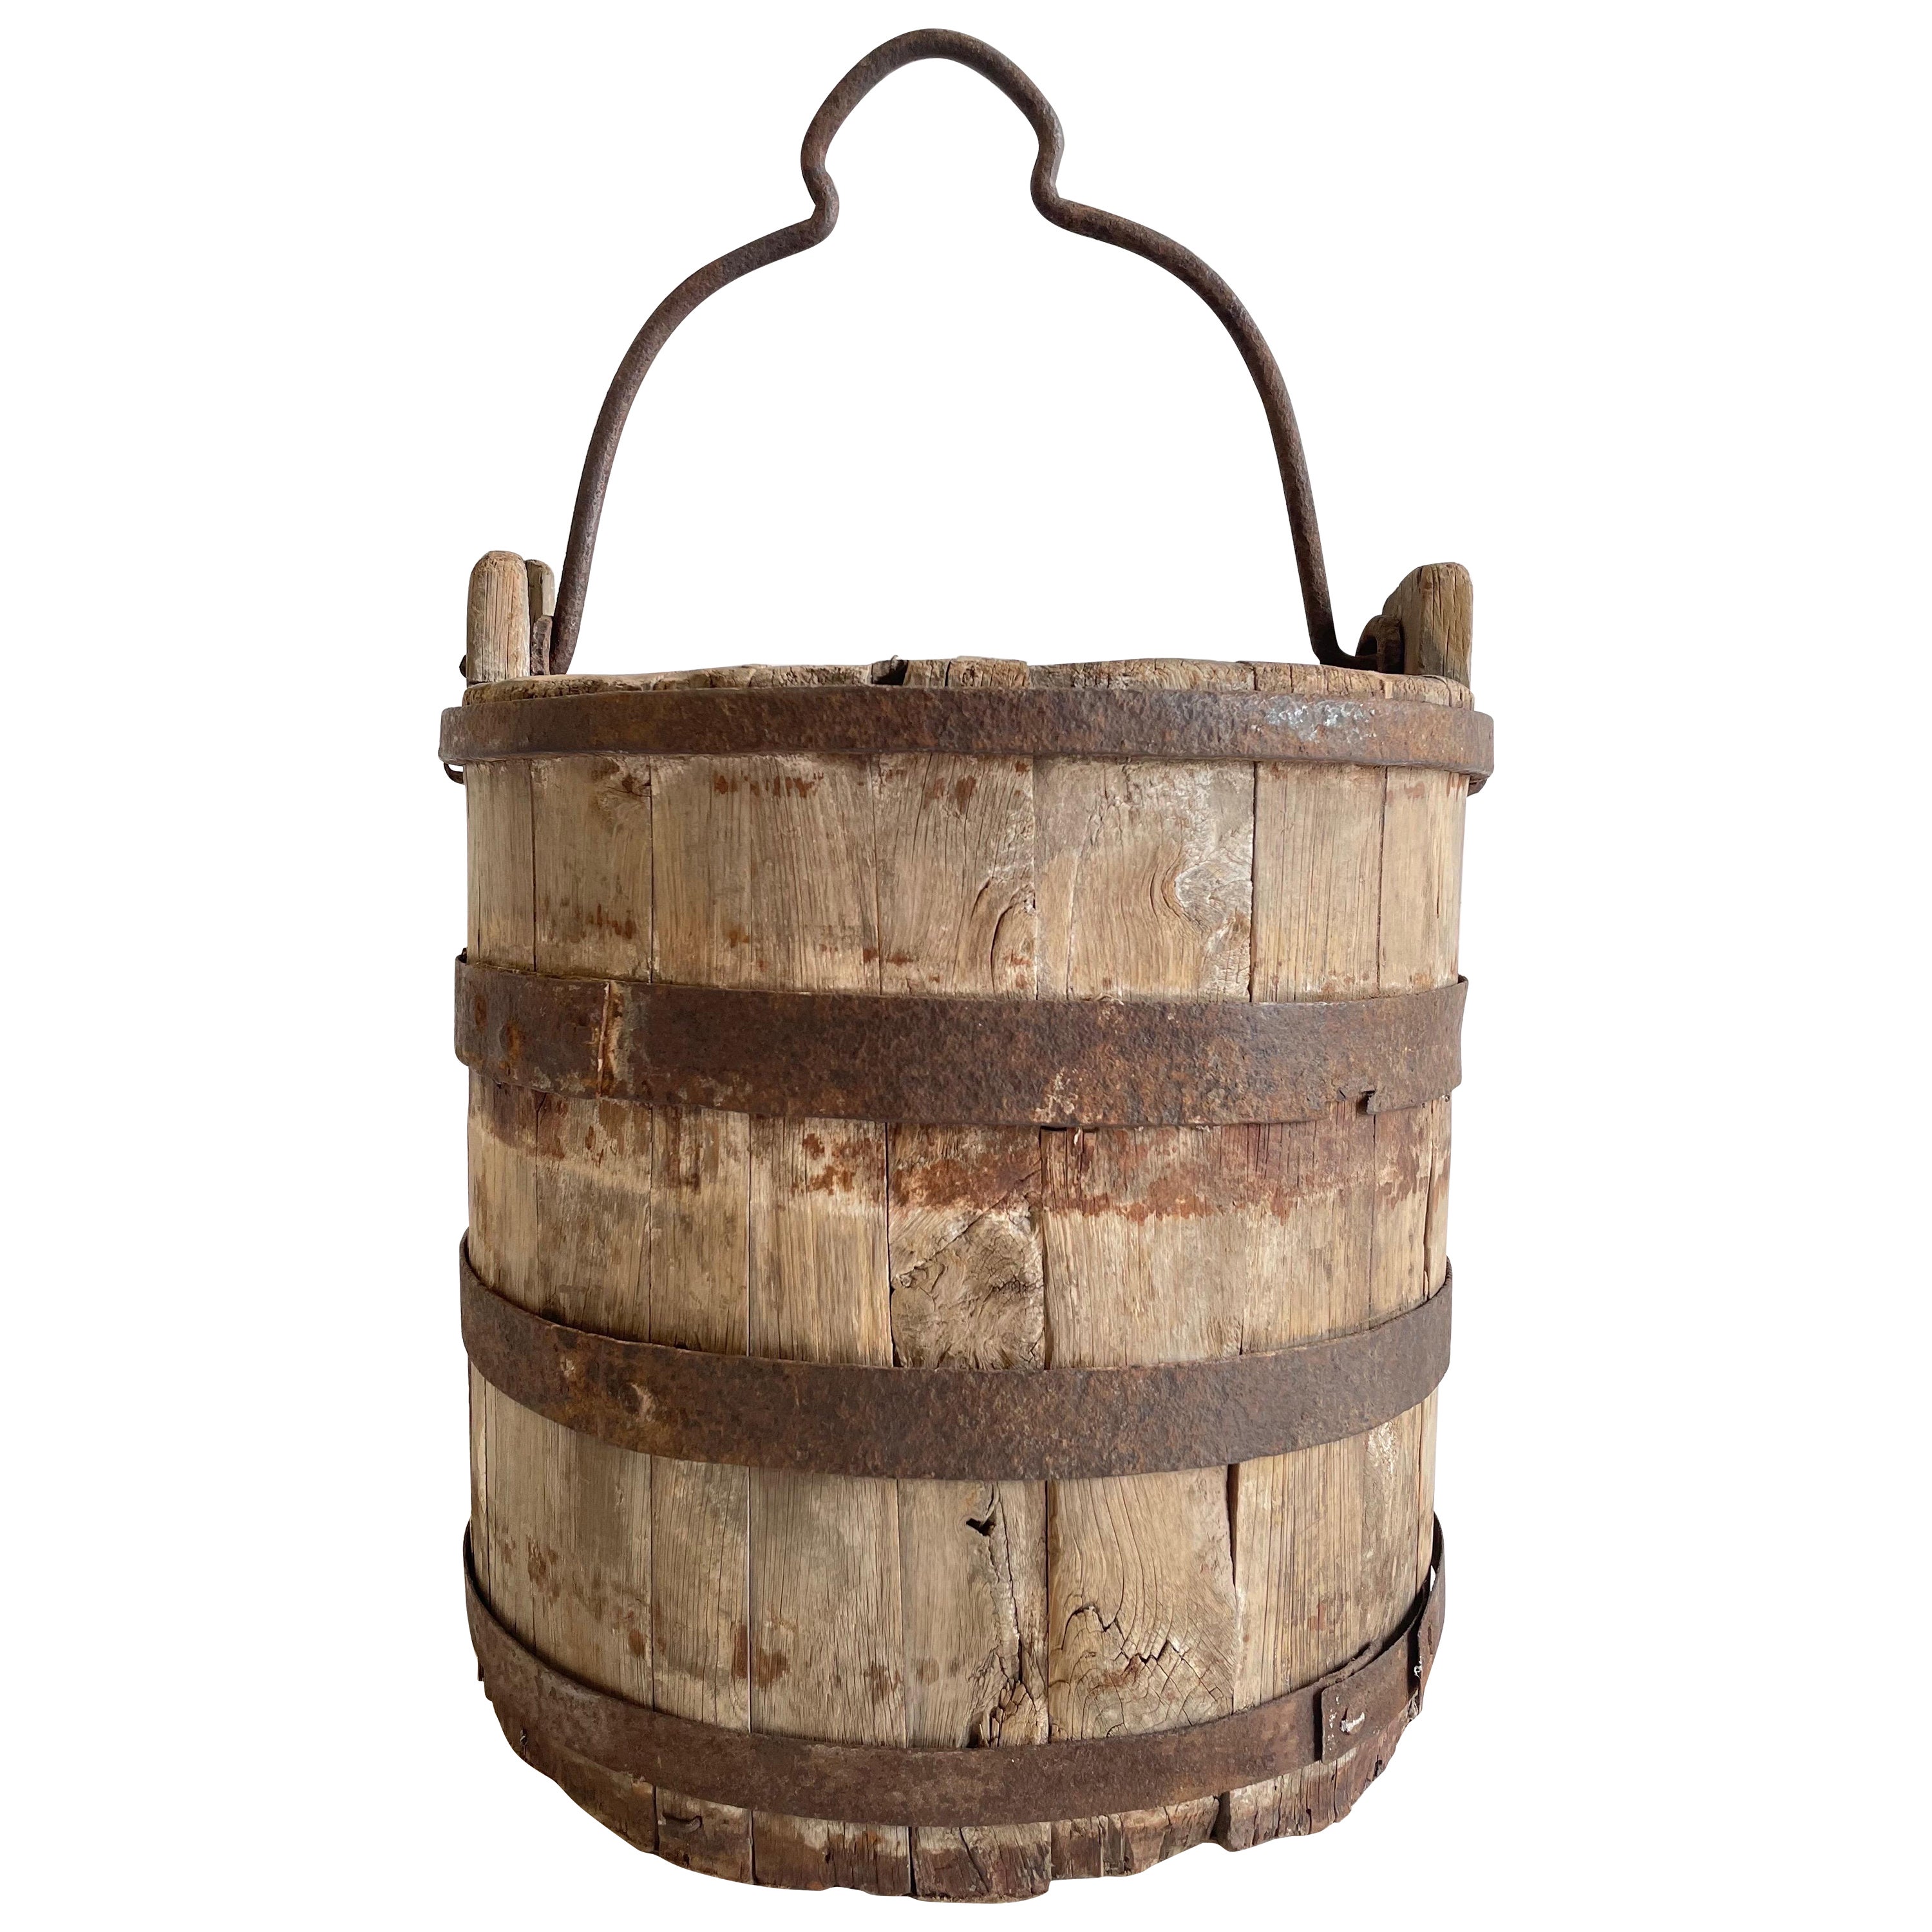 Vintage Weathered Cypress Wood Garden Buckets with Handle